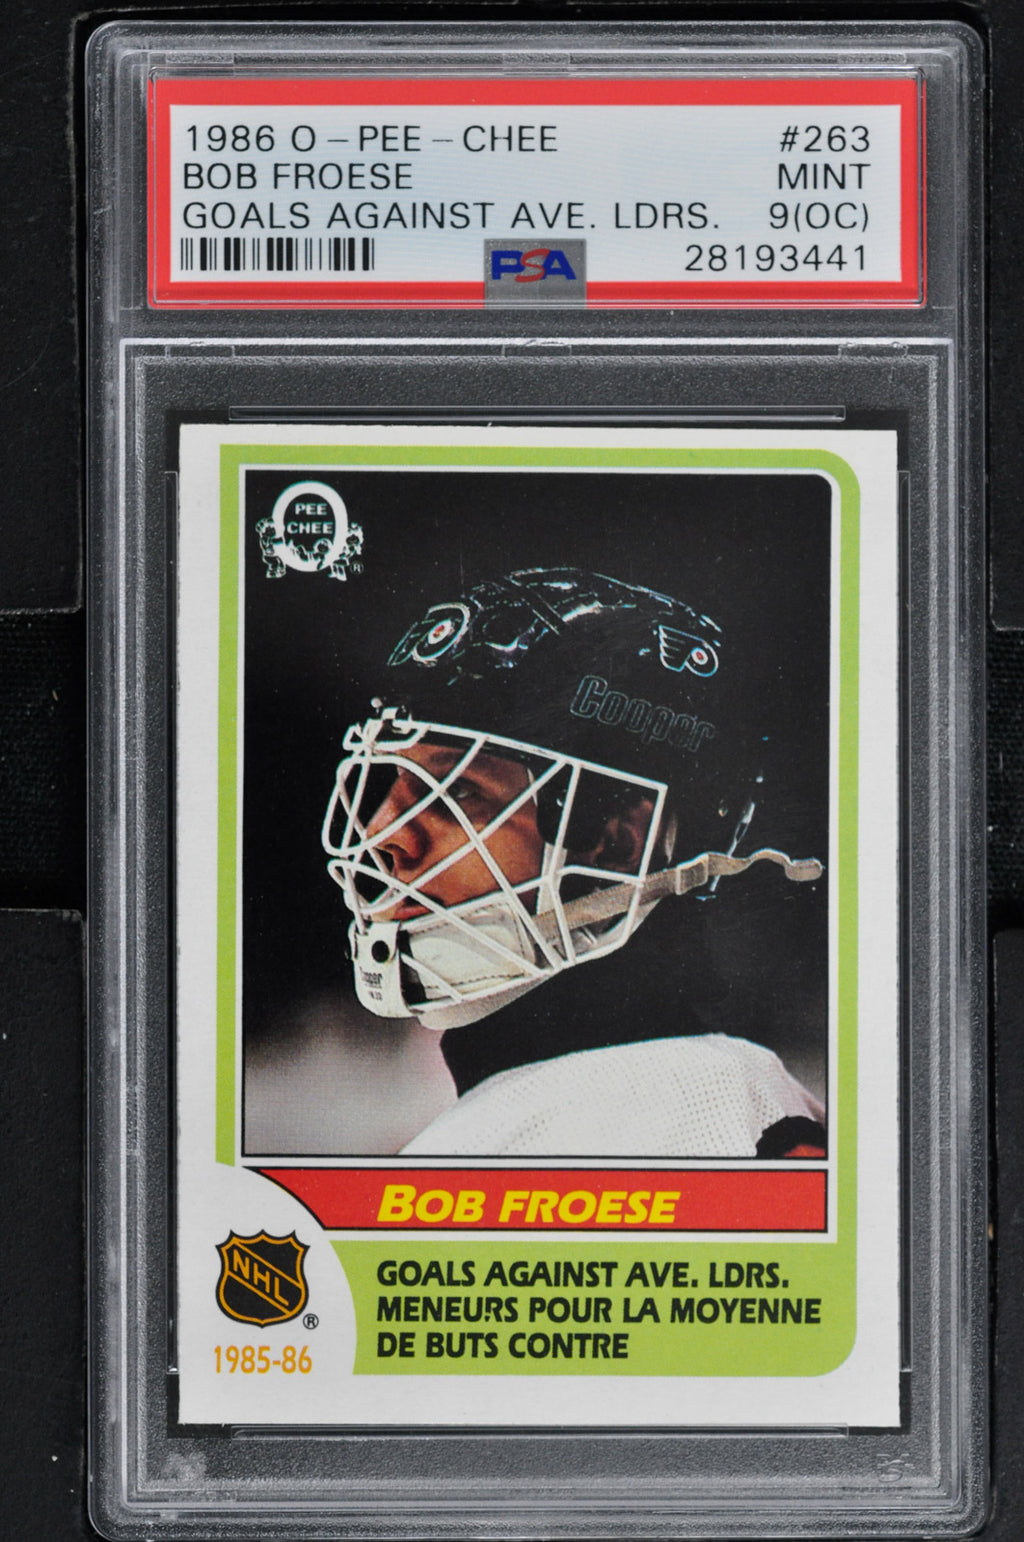 1986 O-Pee-Chee  Hockey #263 Bob Froese - Goals Against Average Leaders - PSA 9 OC - RC000001671